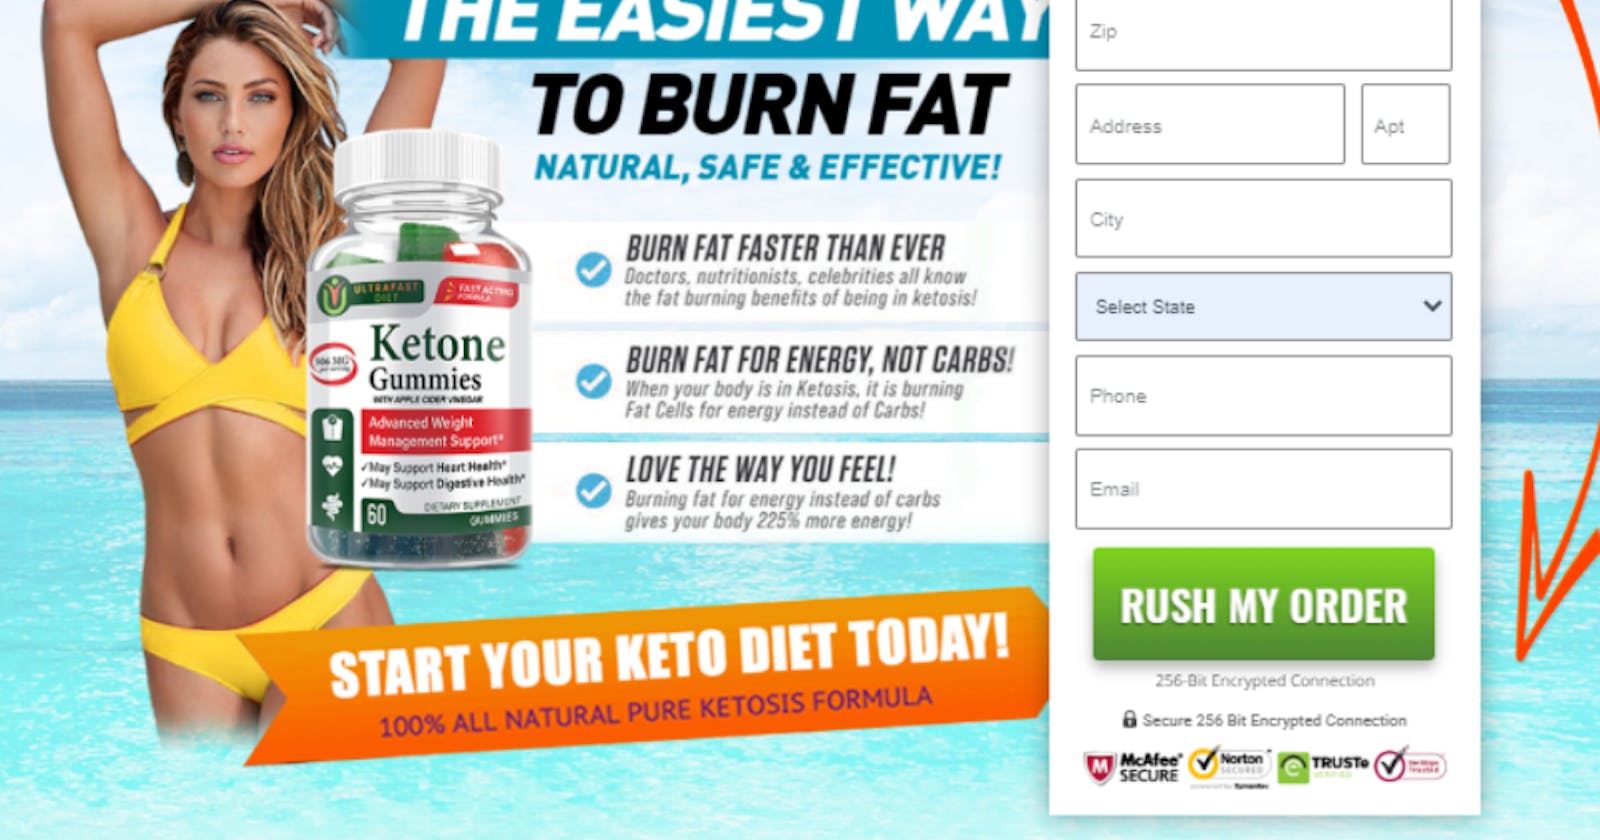 UltraFast Diet Ketone Gummies:- Natural Diet, Weight Loss Tips, Effective Benefits & Buy!